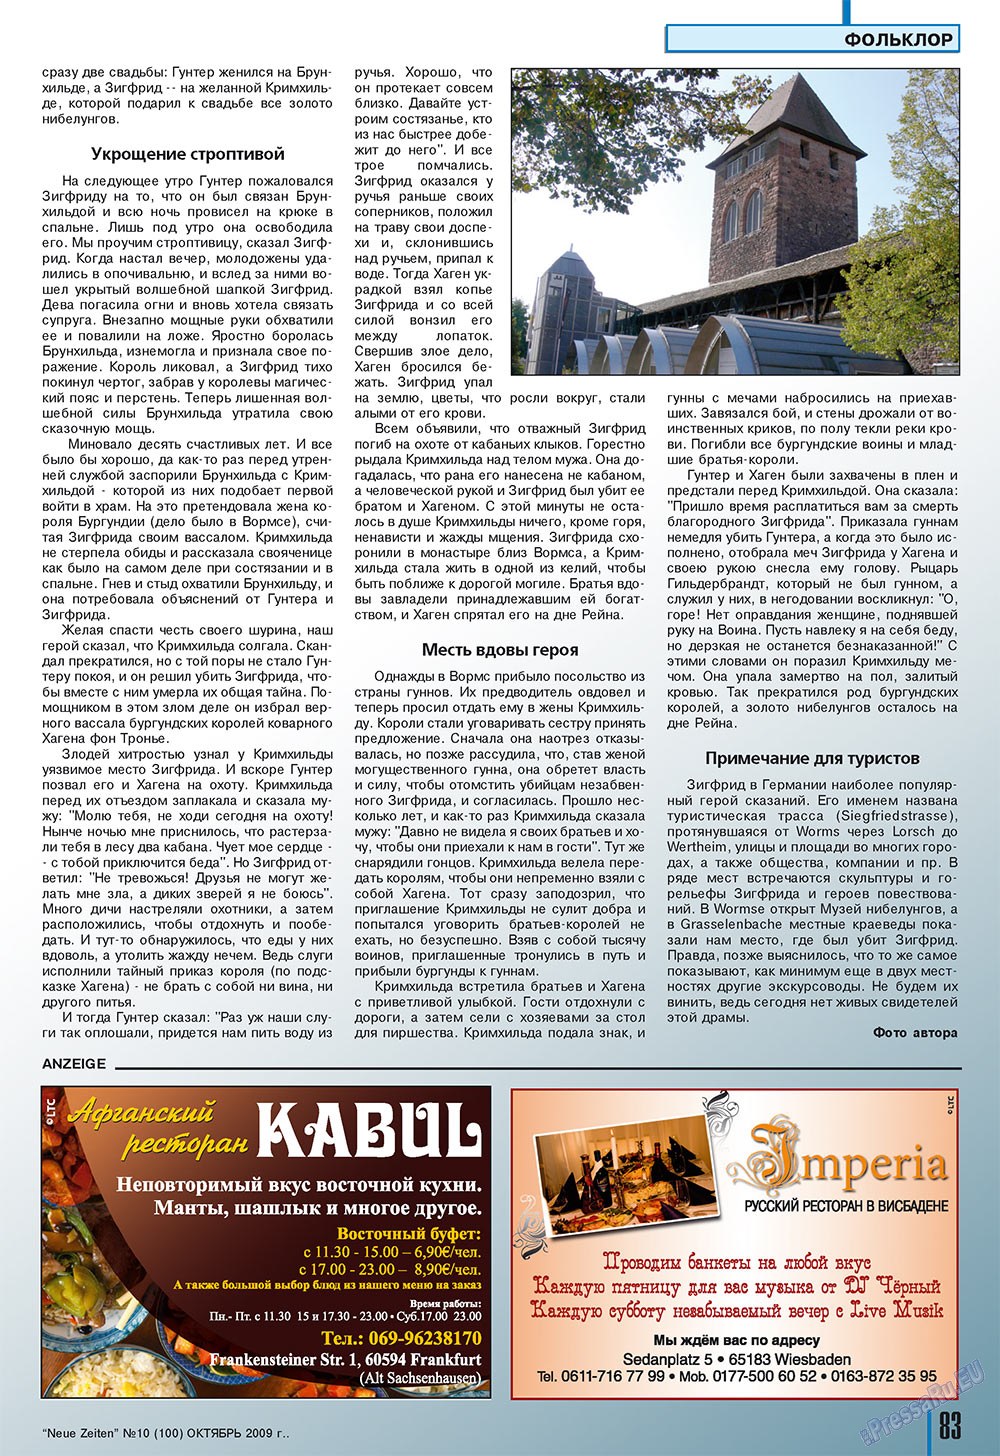 Neue Zeiten (журнал). 2009 год, номер 10, стр. 83